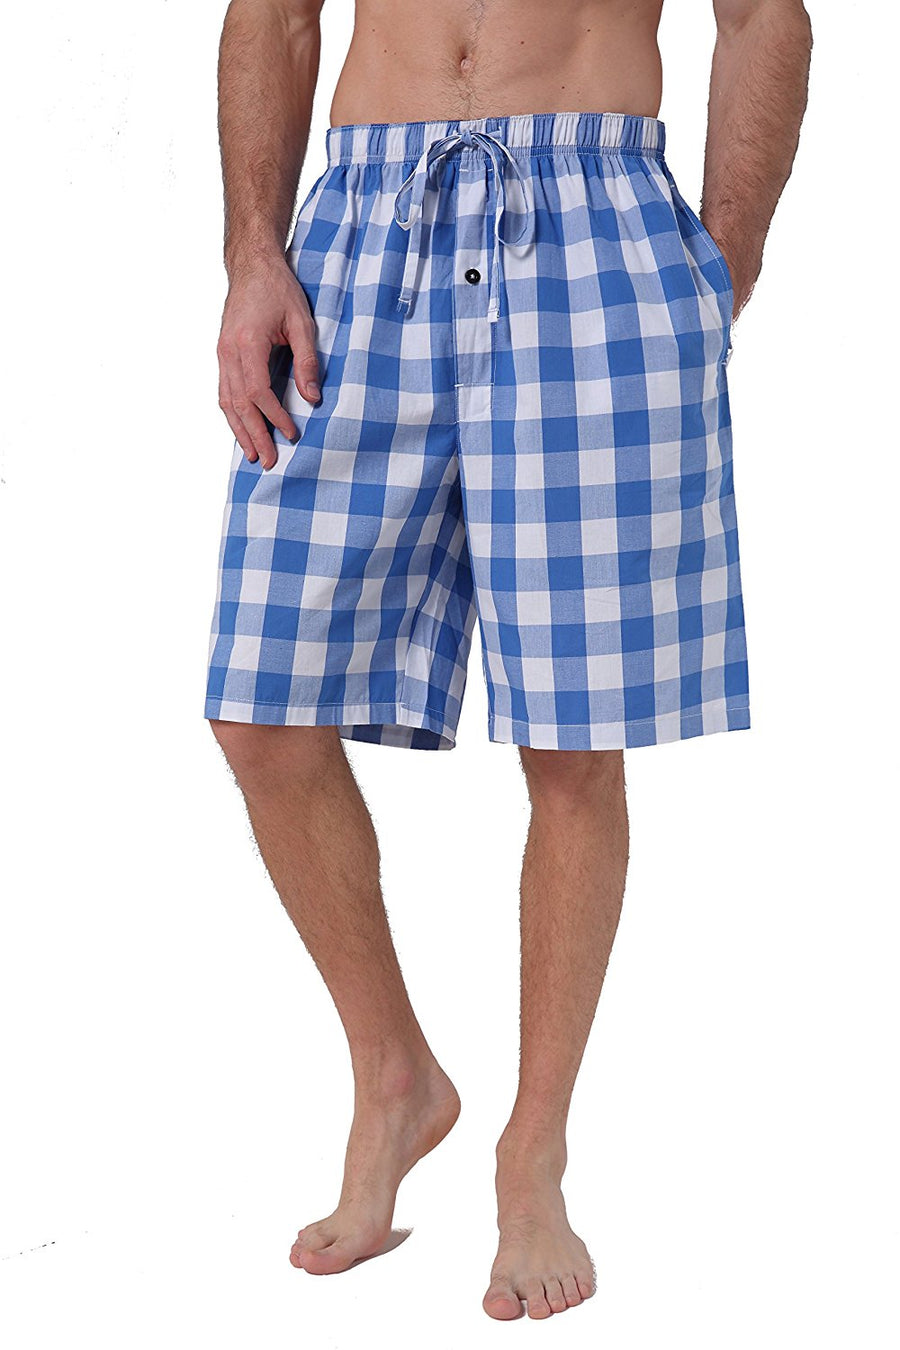 vvfelixl Men's Pajama Shorts Boxer Dog Sleep Shorts for Men Pajama